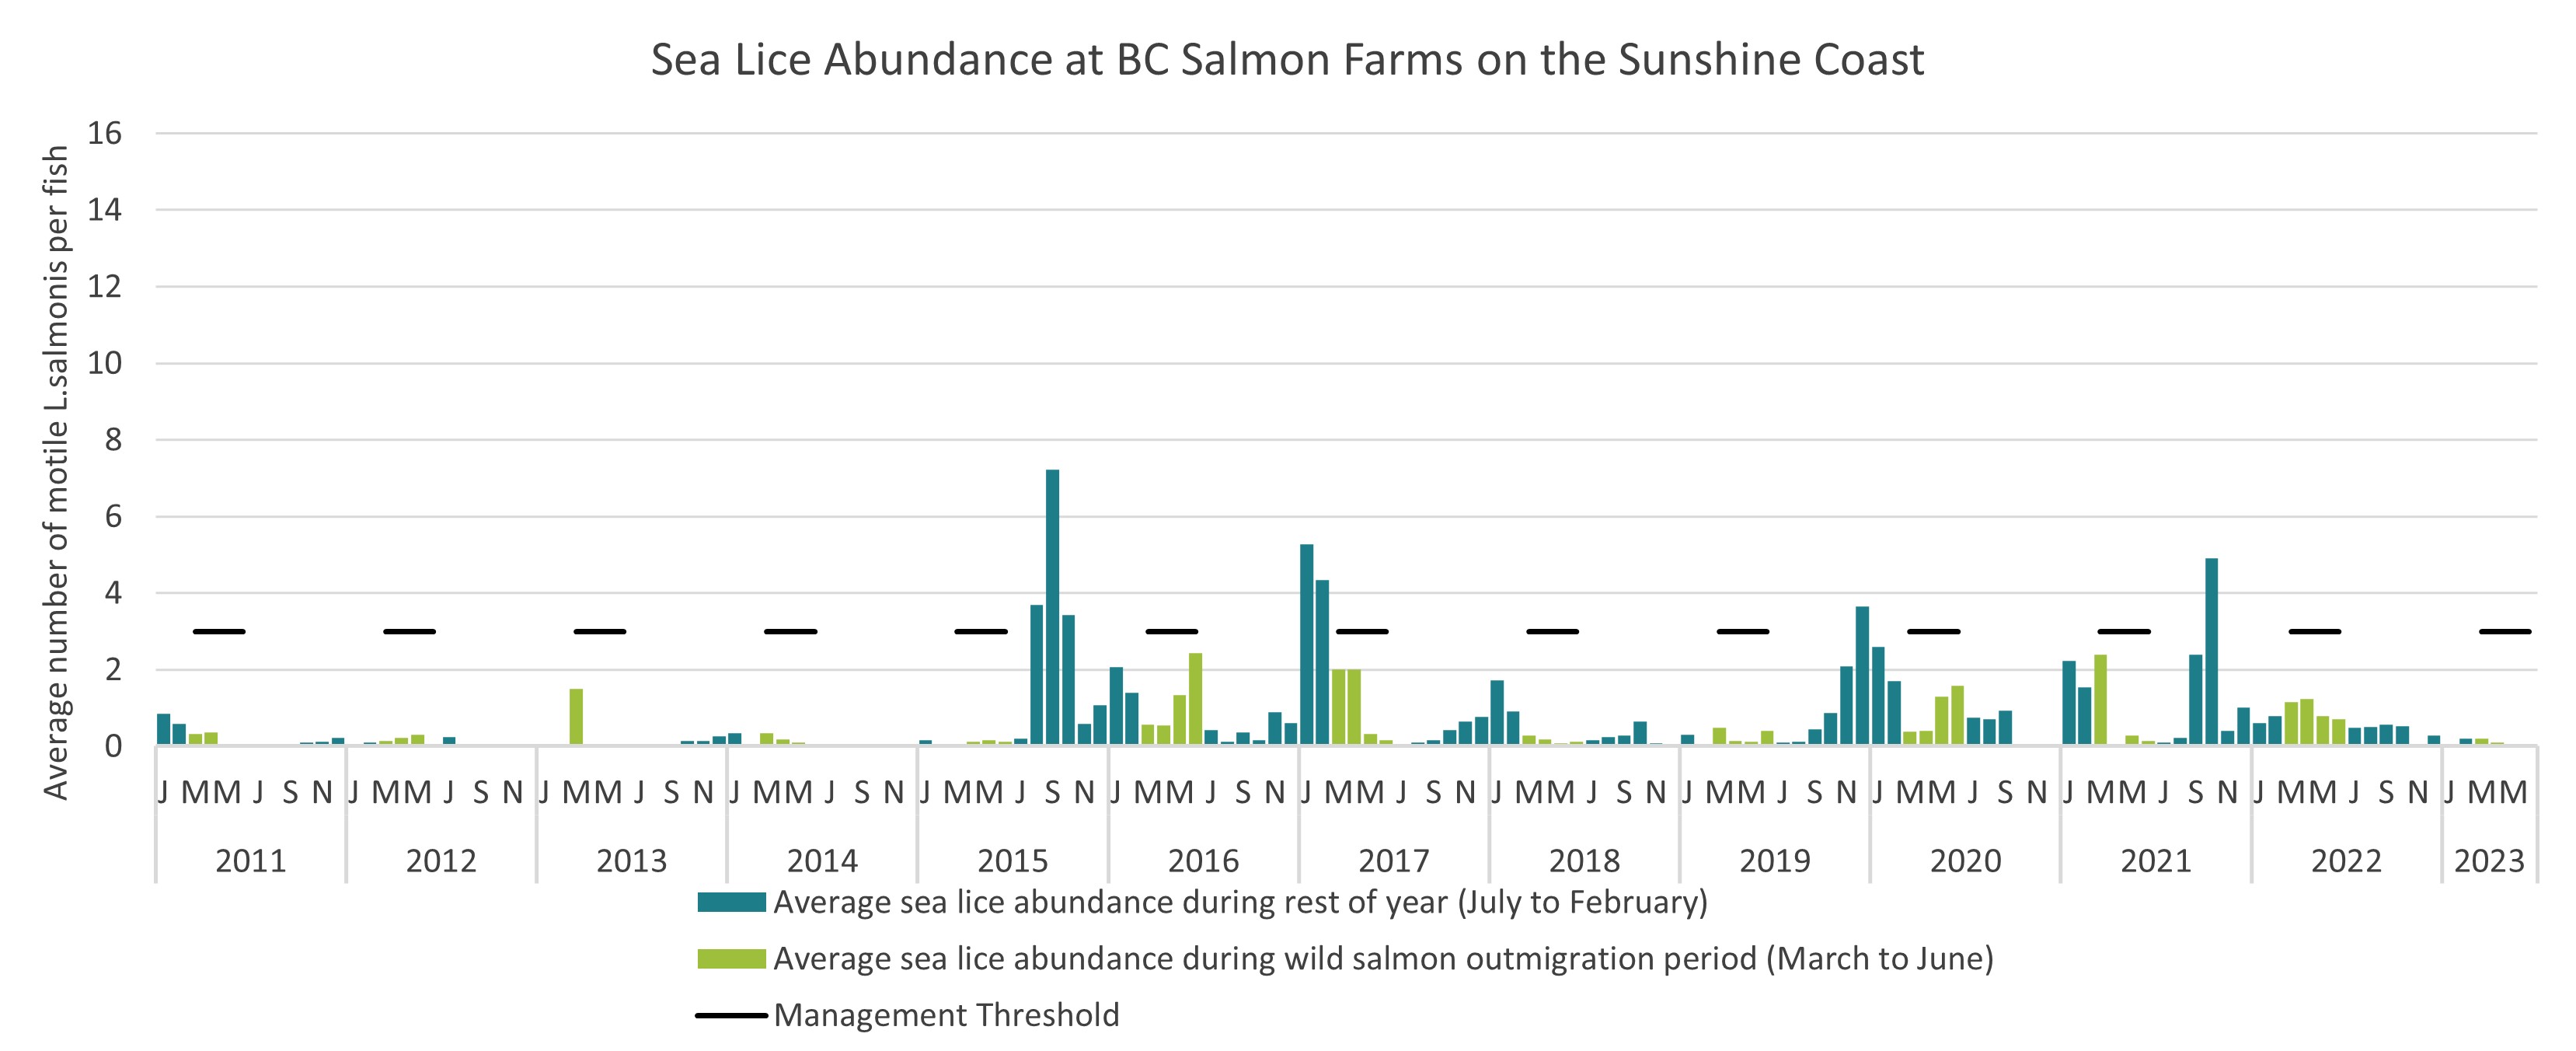 Sea Lice Abundance at BC Salmon Farms on the Sunshine Coast, 2011 to 2023